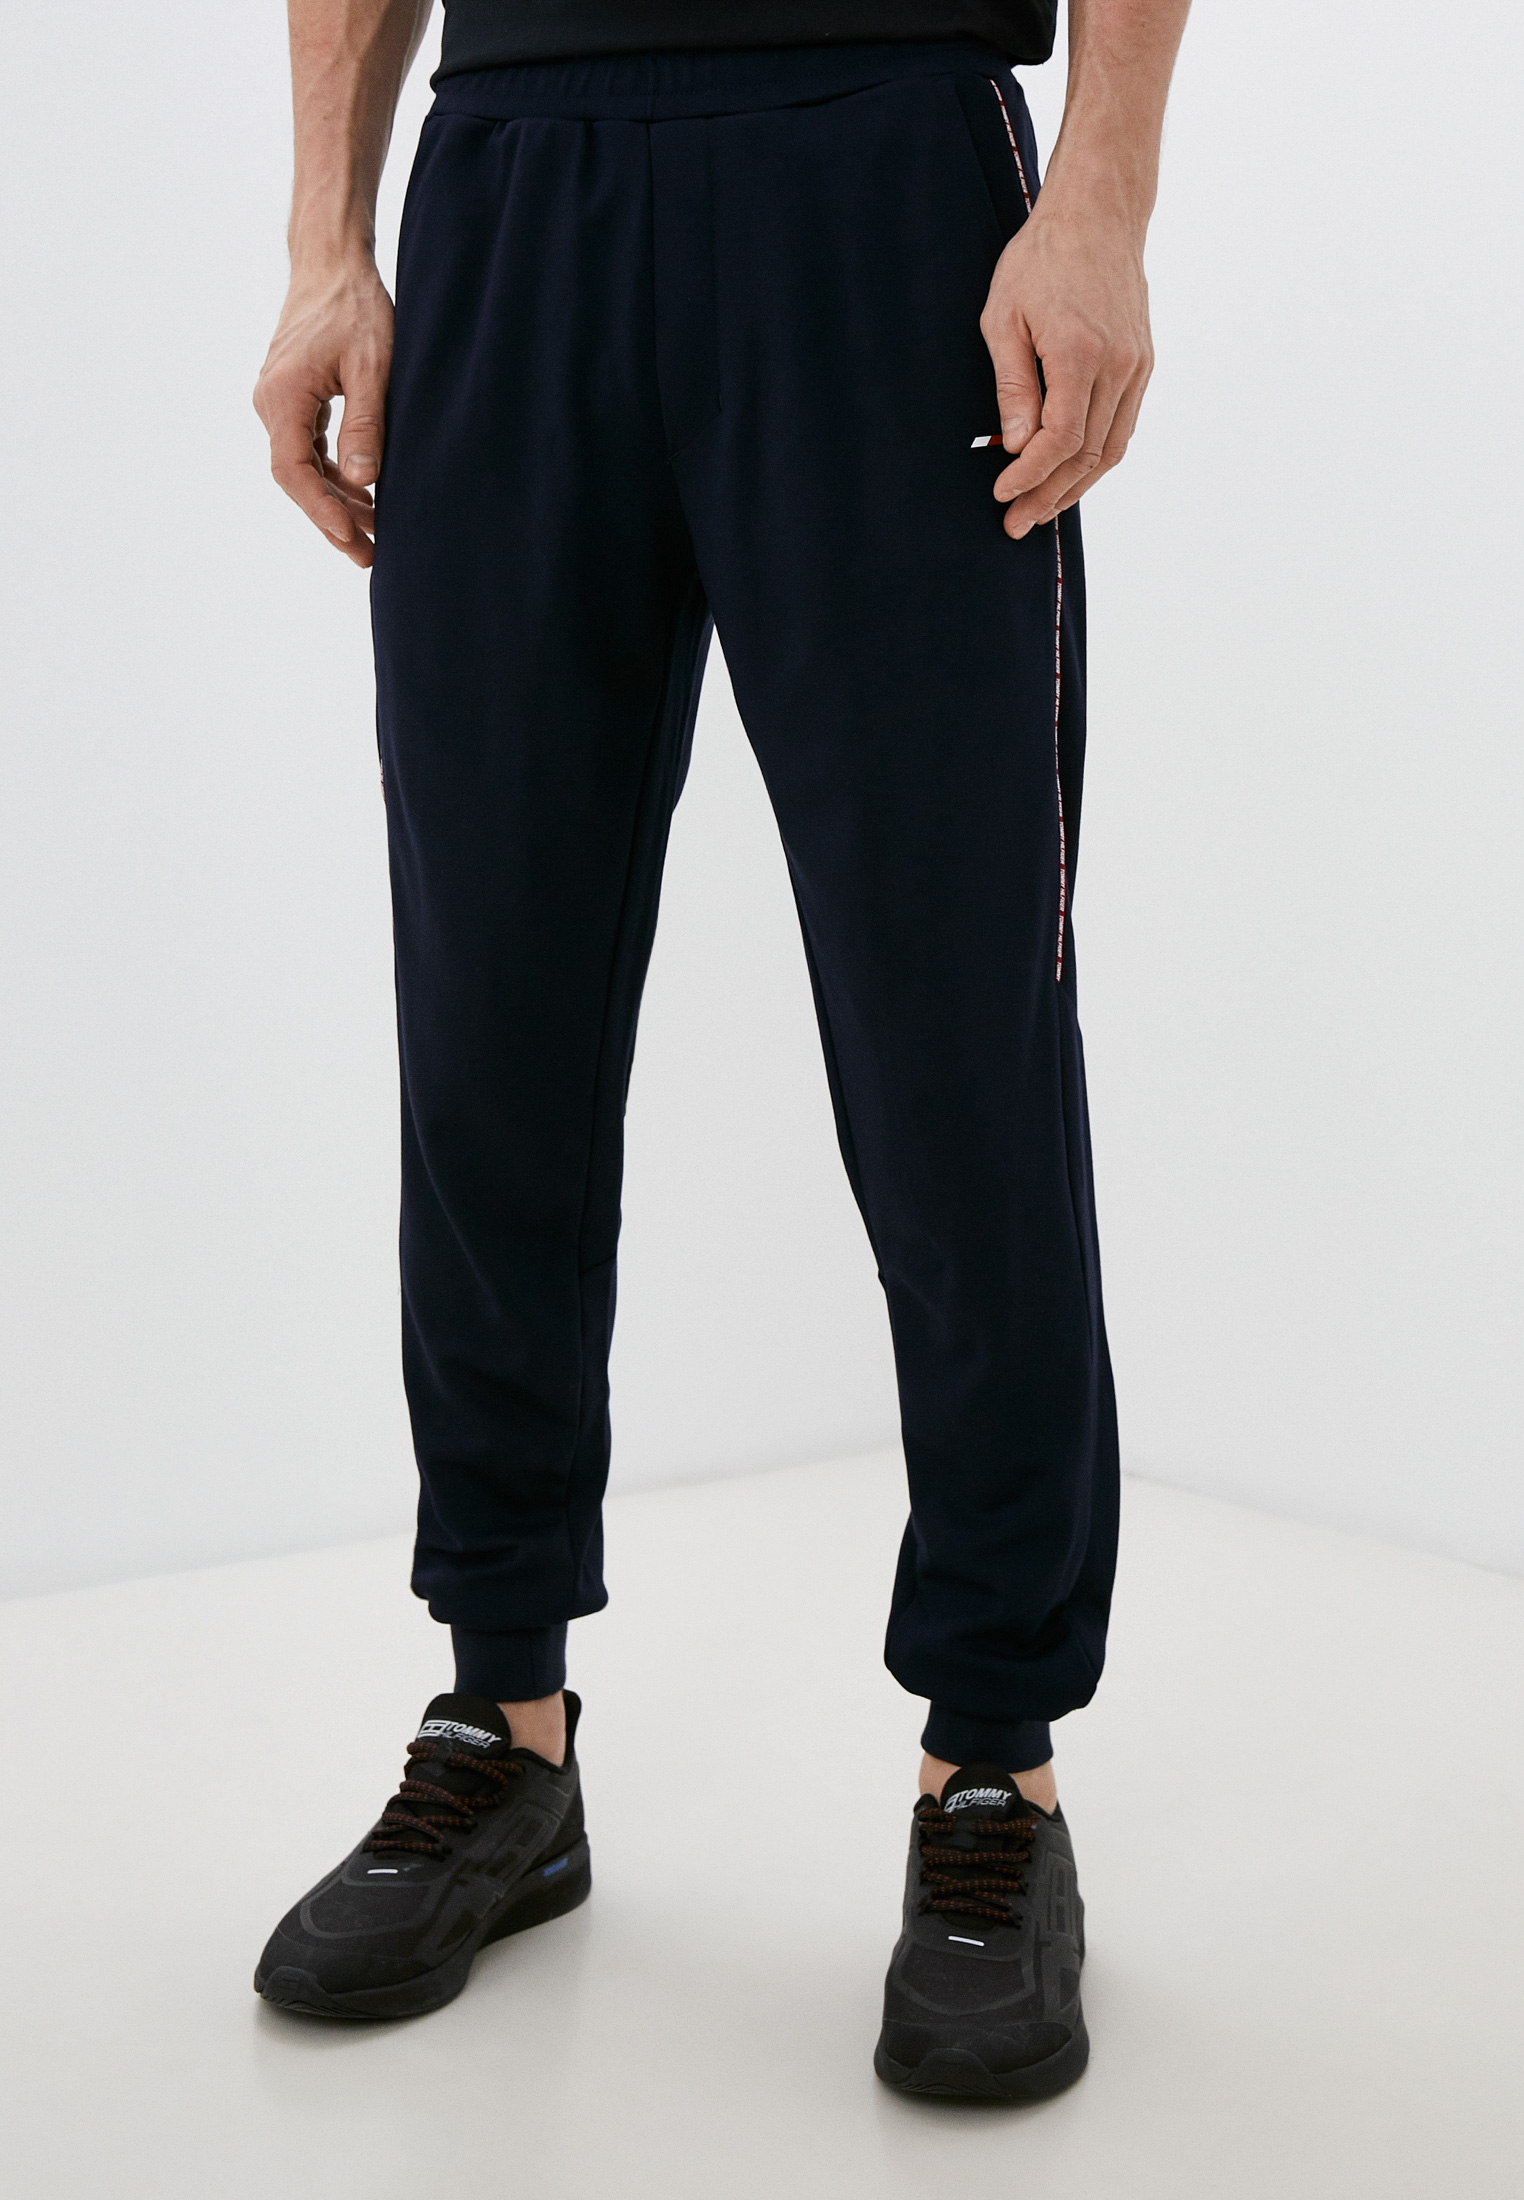 Мужские спортивные брюки Tommy Hilfiger (Томми Хилфигер) MW0MW28951